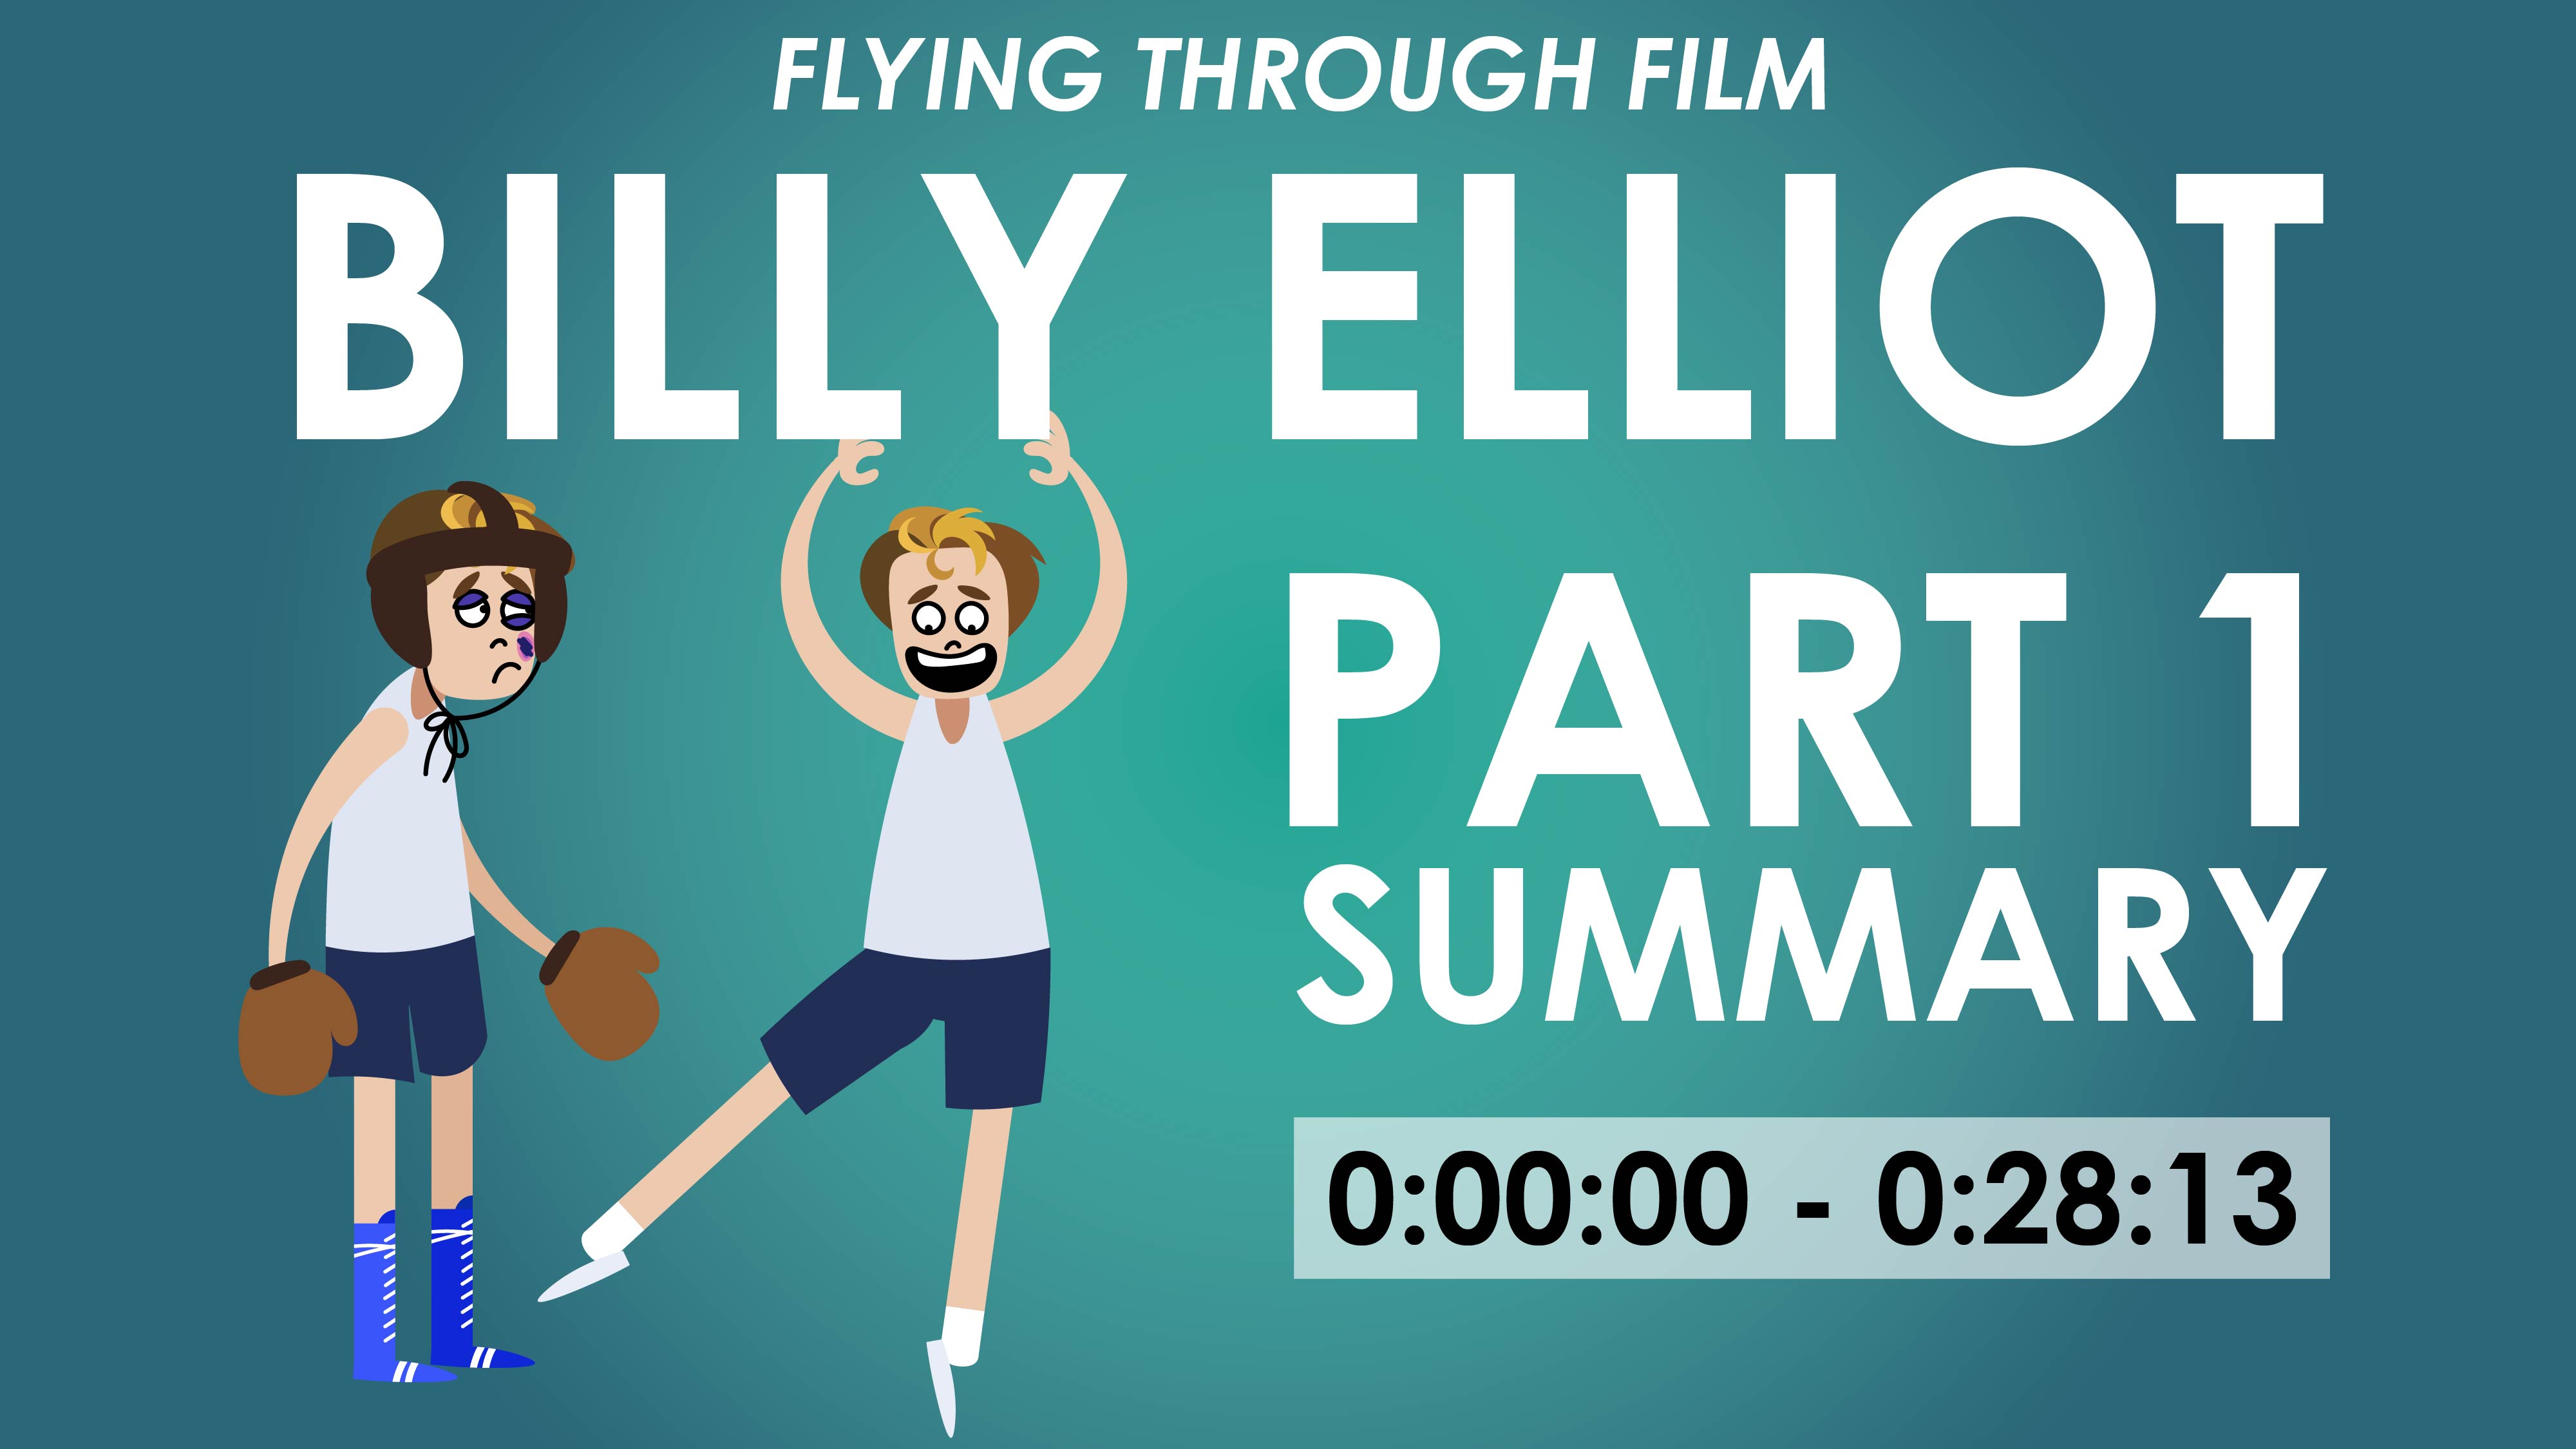 Billy Elliot - Part 1 Summary (0:00:00 - 0:28:13) - Flying Through Film Series